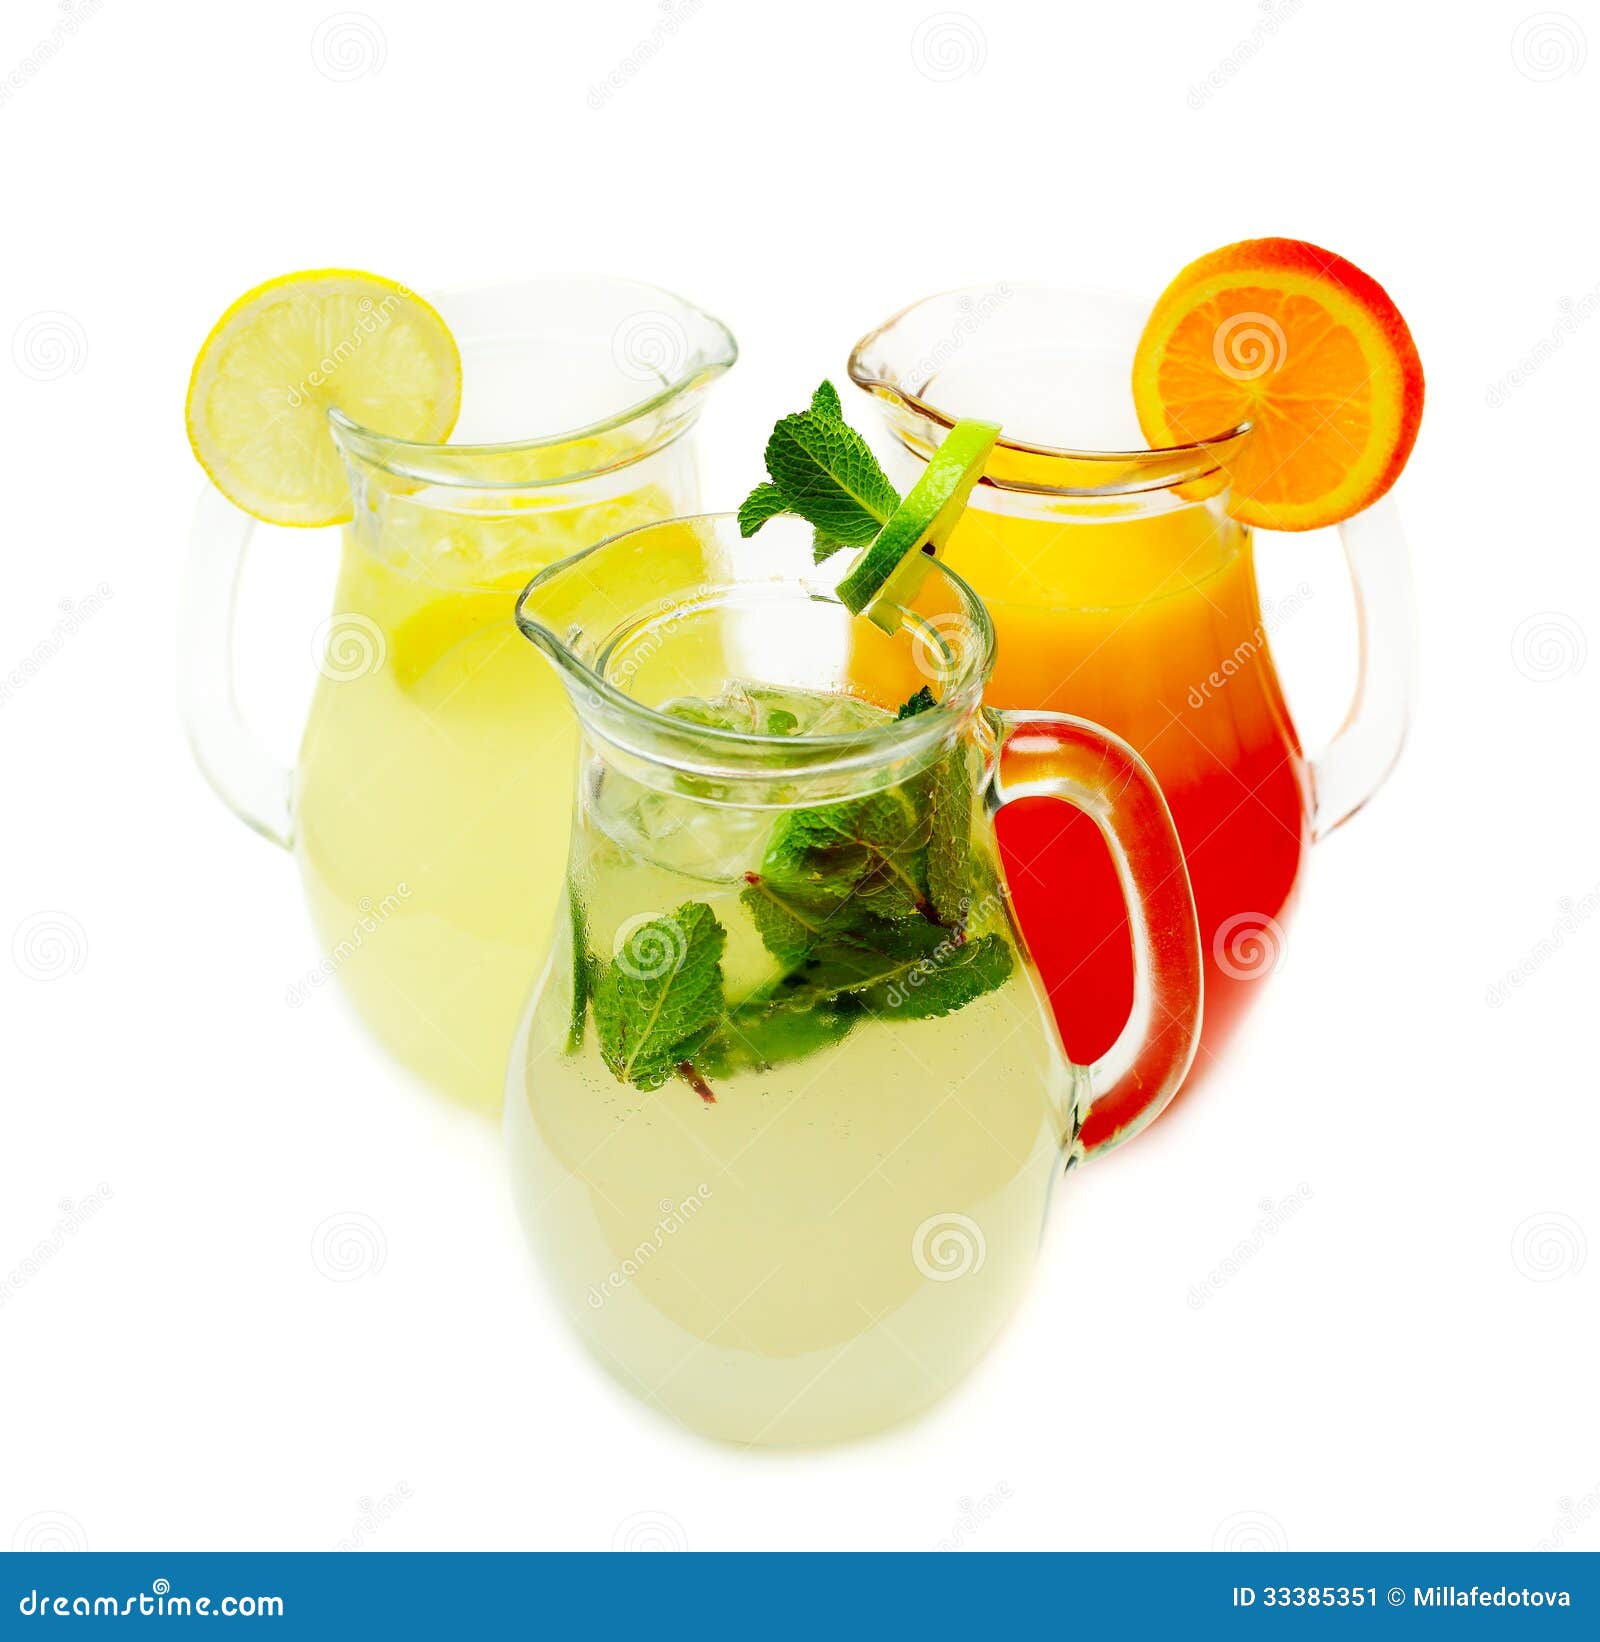 Summer Lemonade drink - with lemon, orange, lime and mint leaves